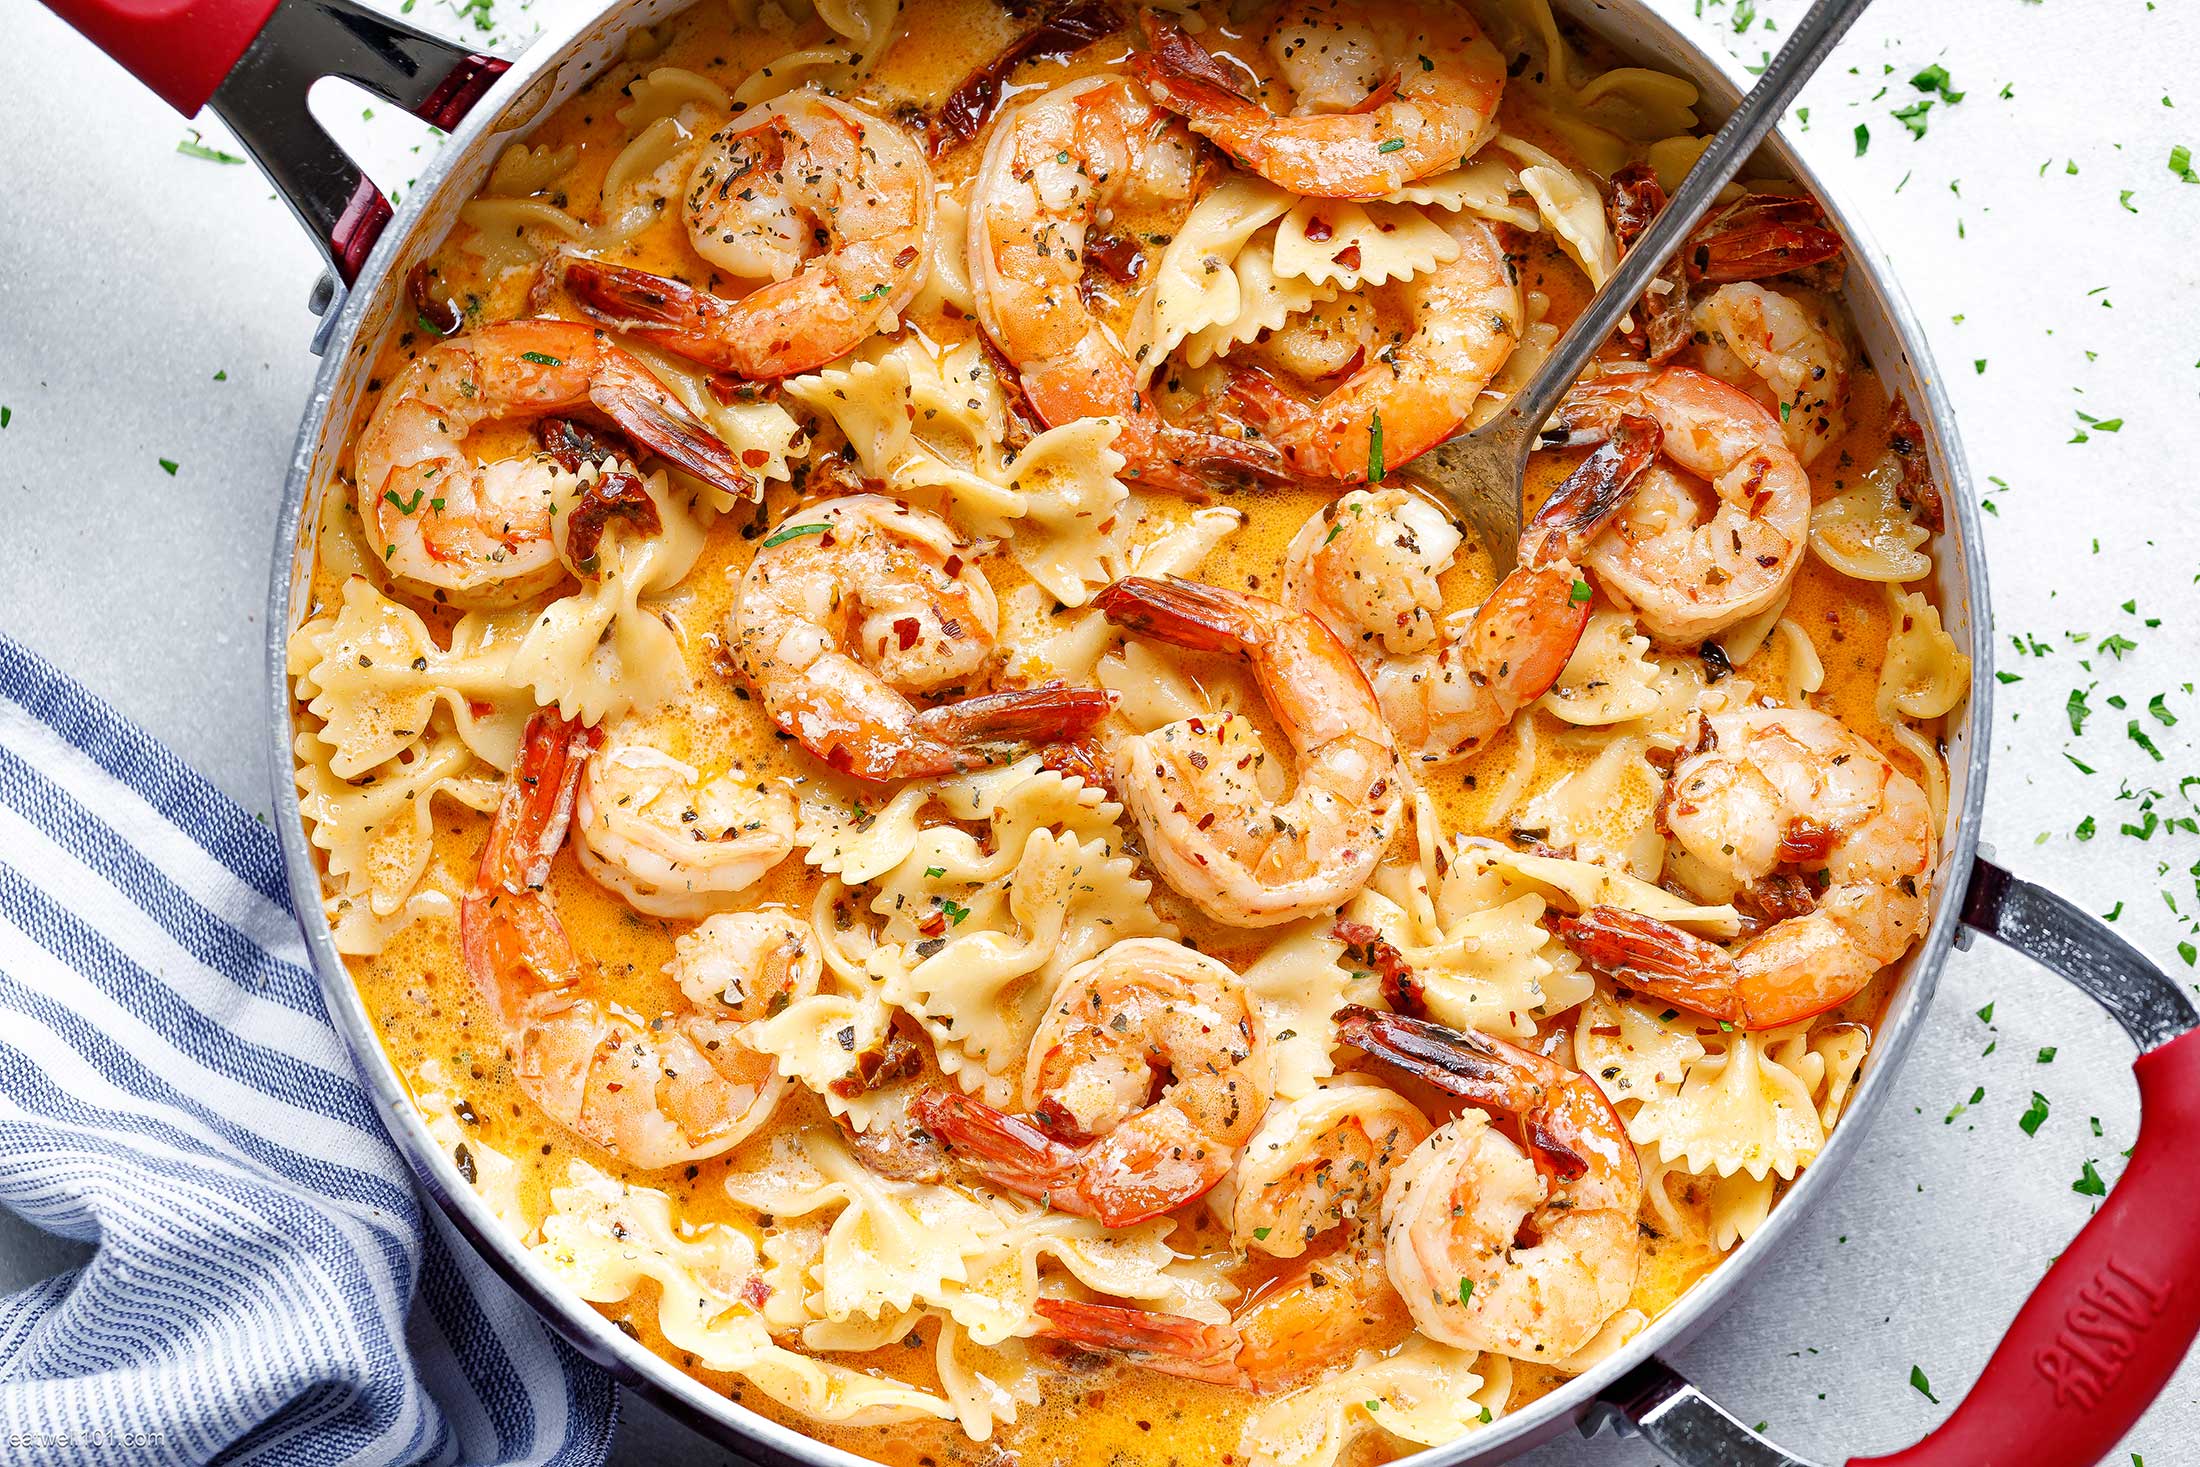 https://www.eatwell101.com/wp-content/uploads/2020/04/Shrimp-Pasta-recipe.jpg